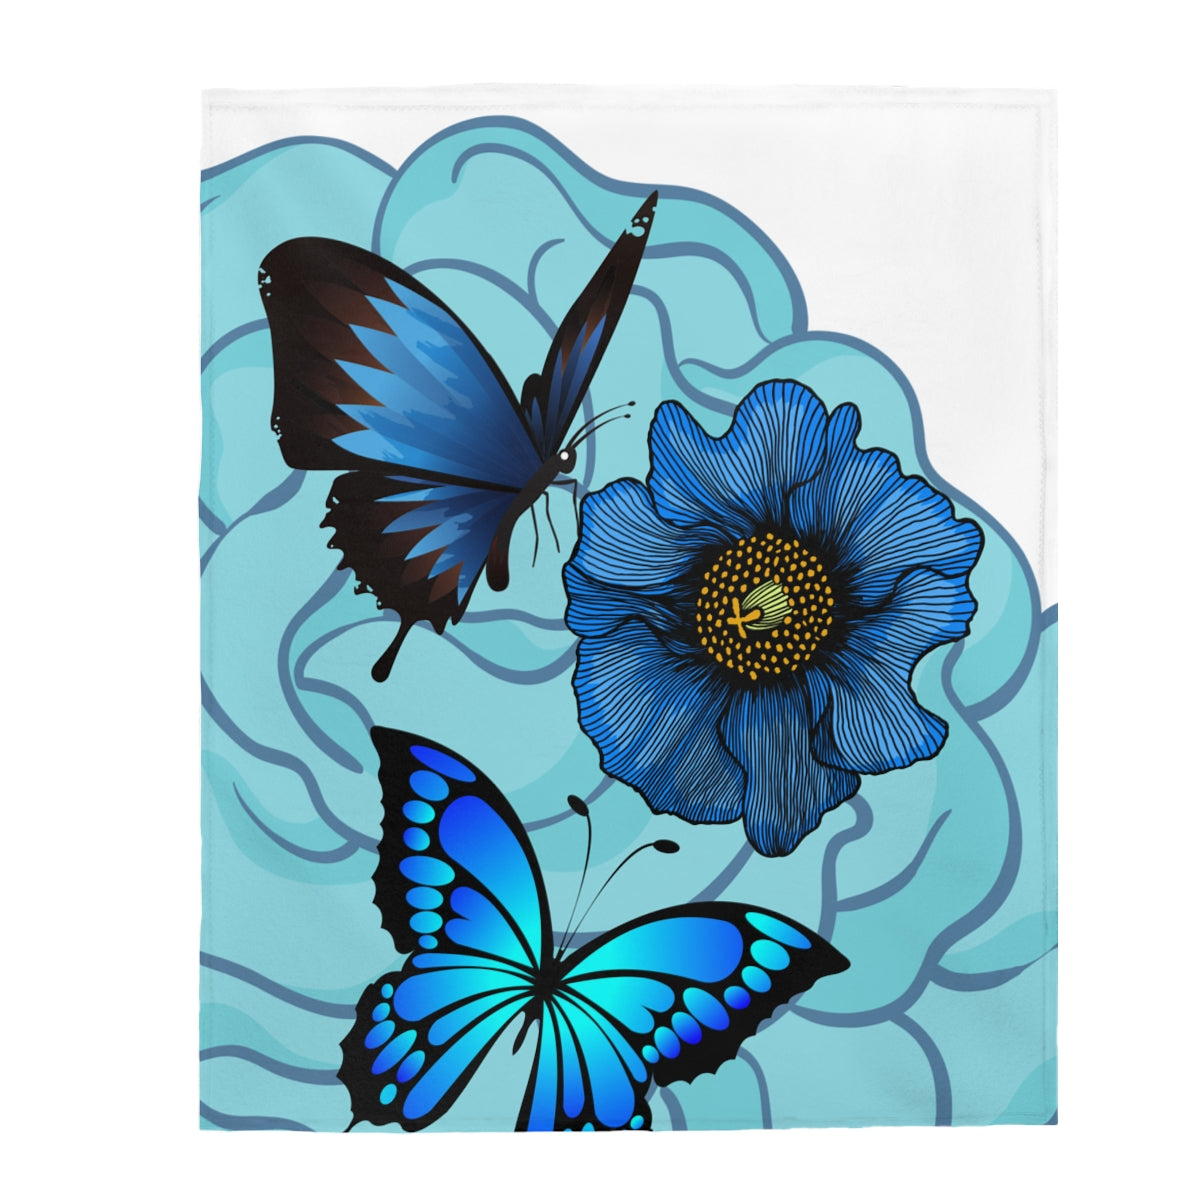 Throw Blanket Velveteen Plush Blanket Blue floral and Butterfly